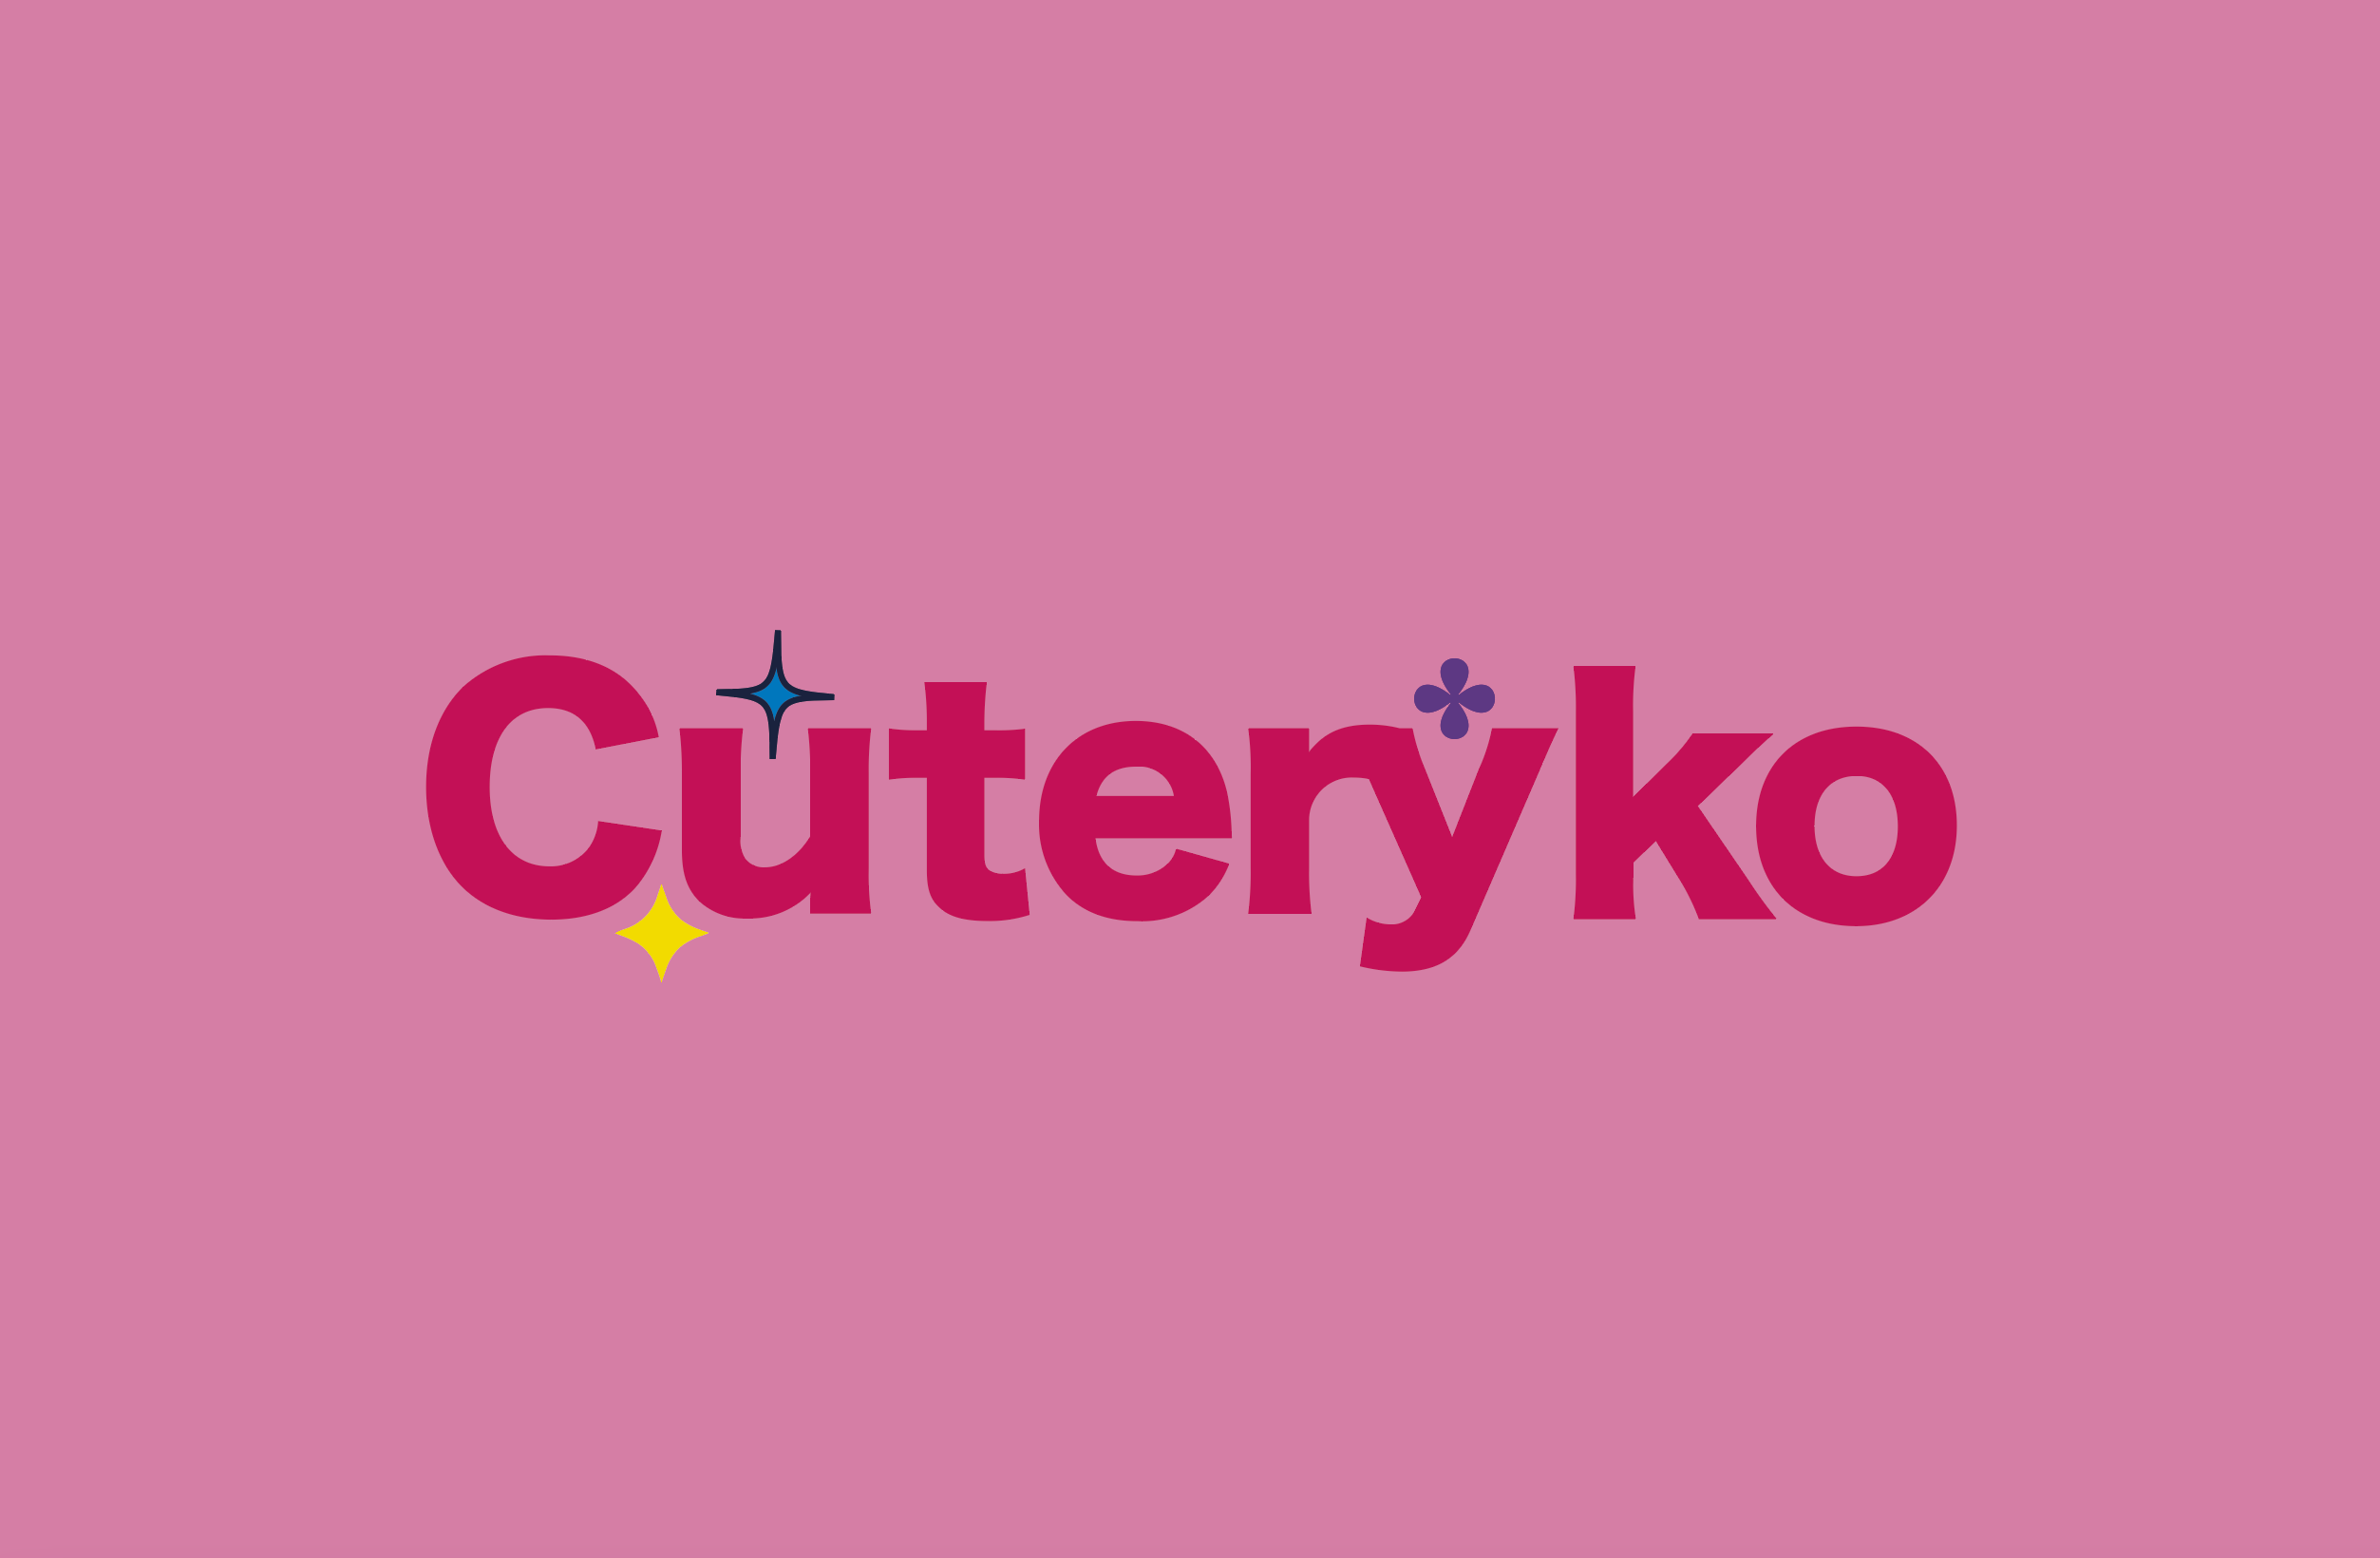 Cuteryko